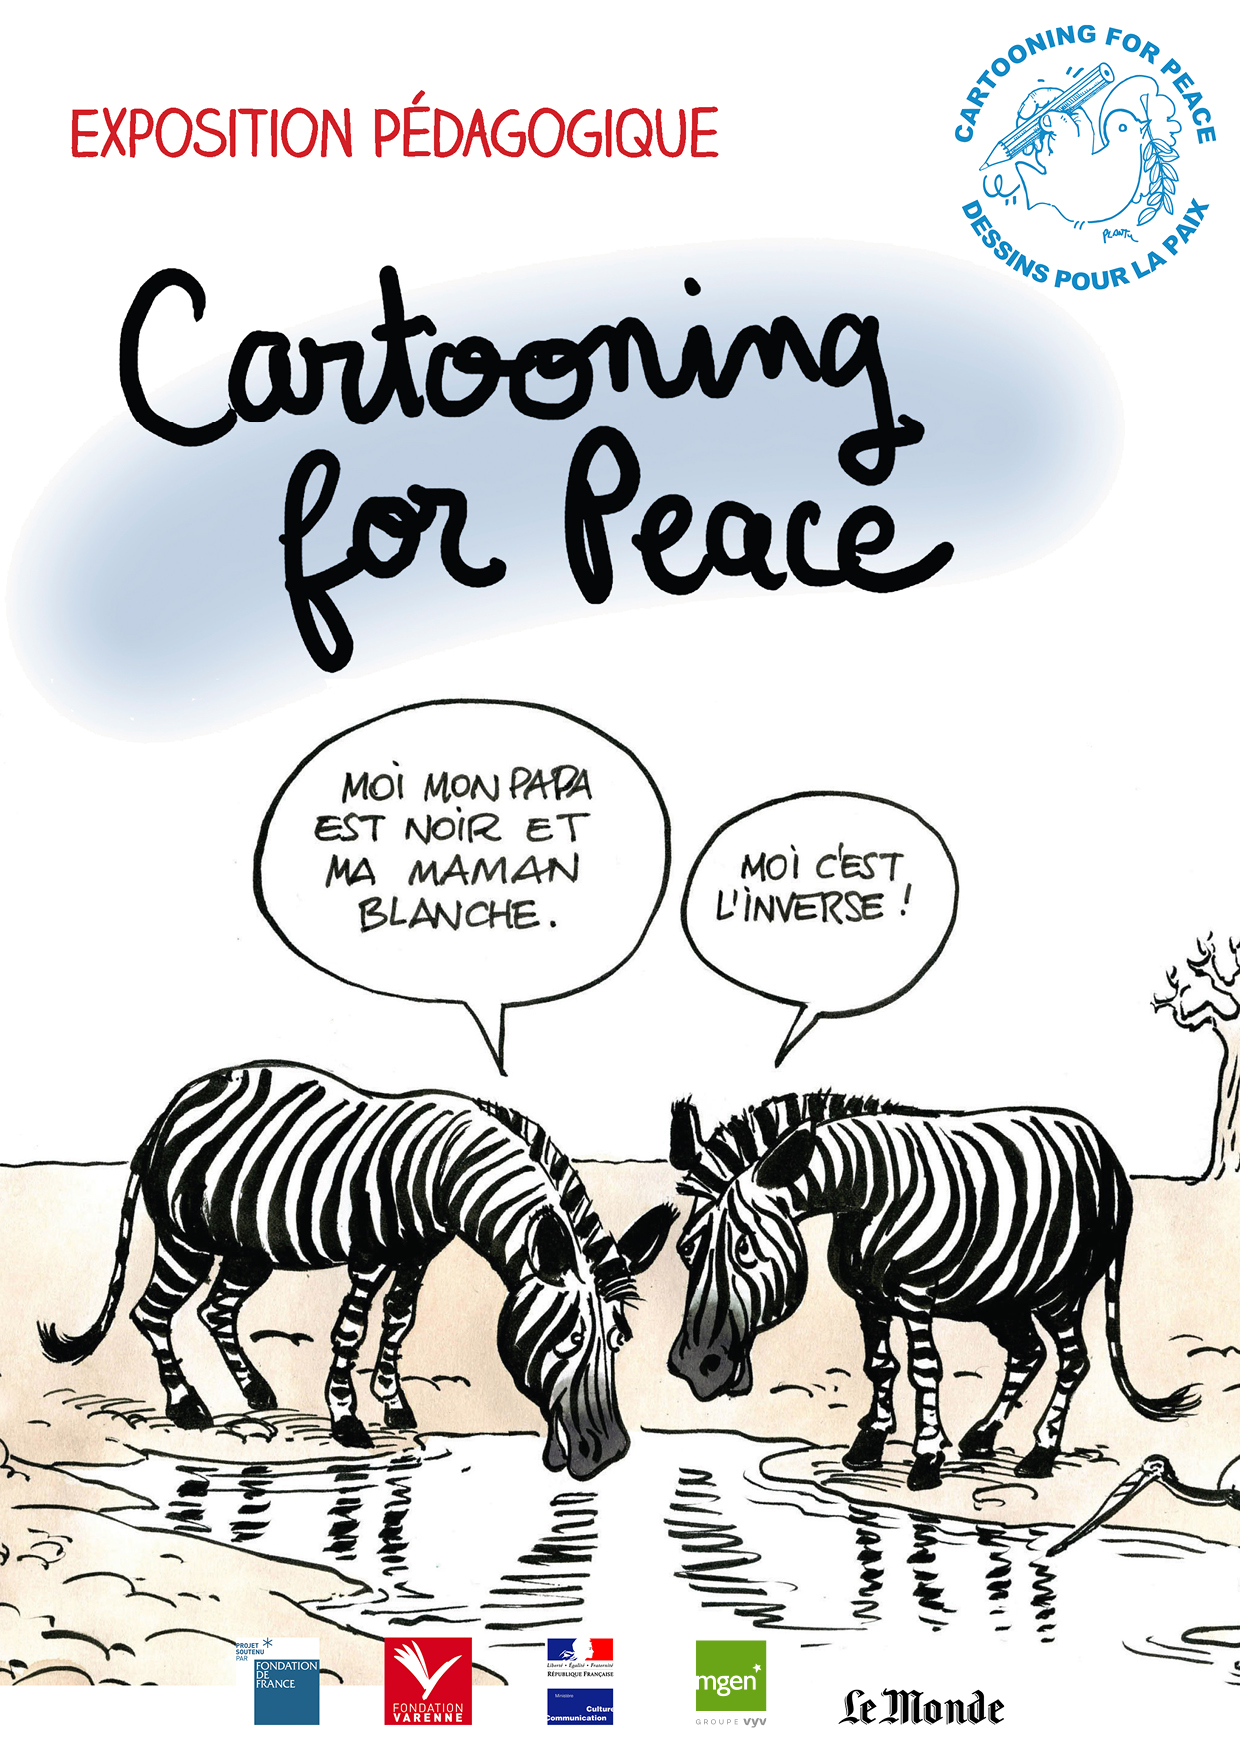 Logo Prêt d'expositions Cartooning for Peace